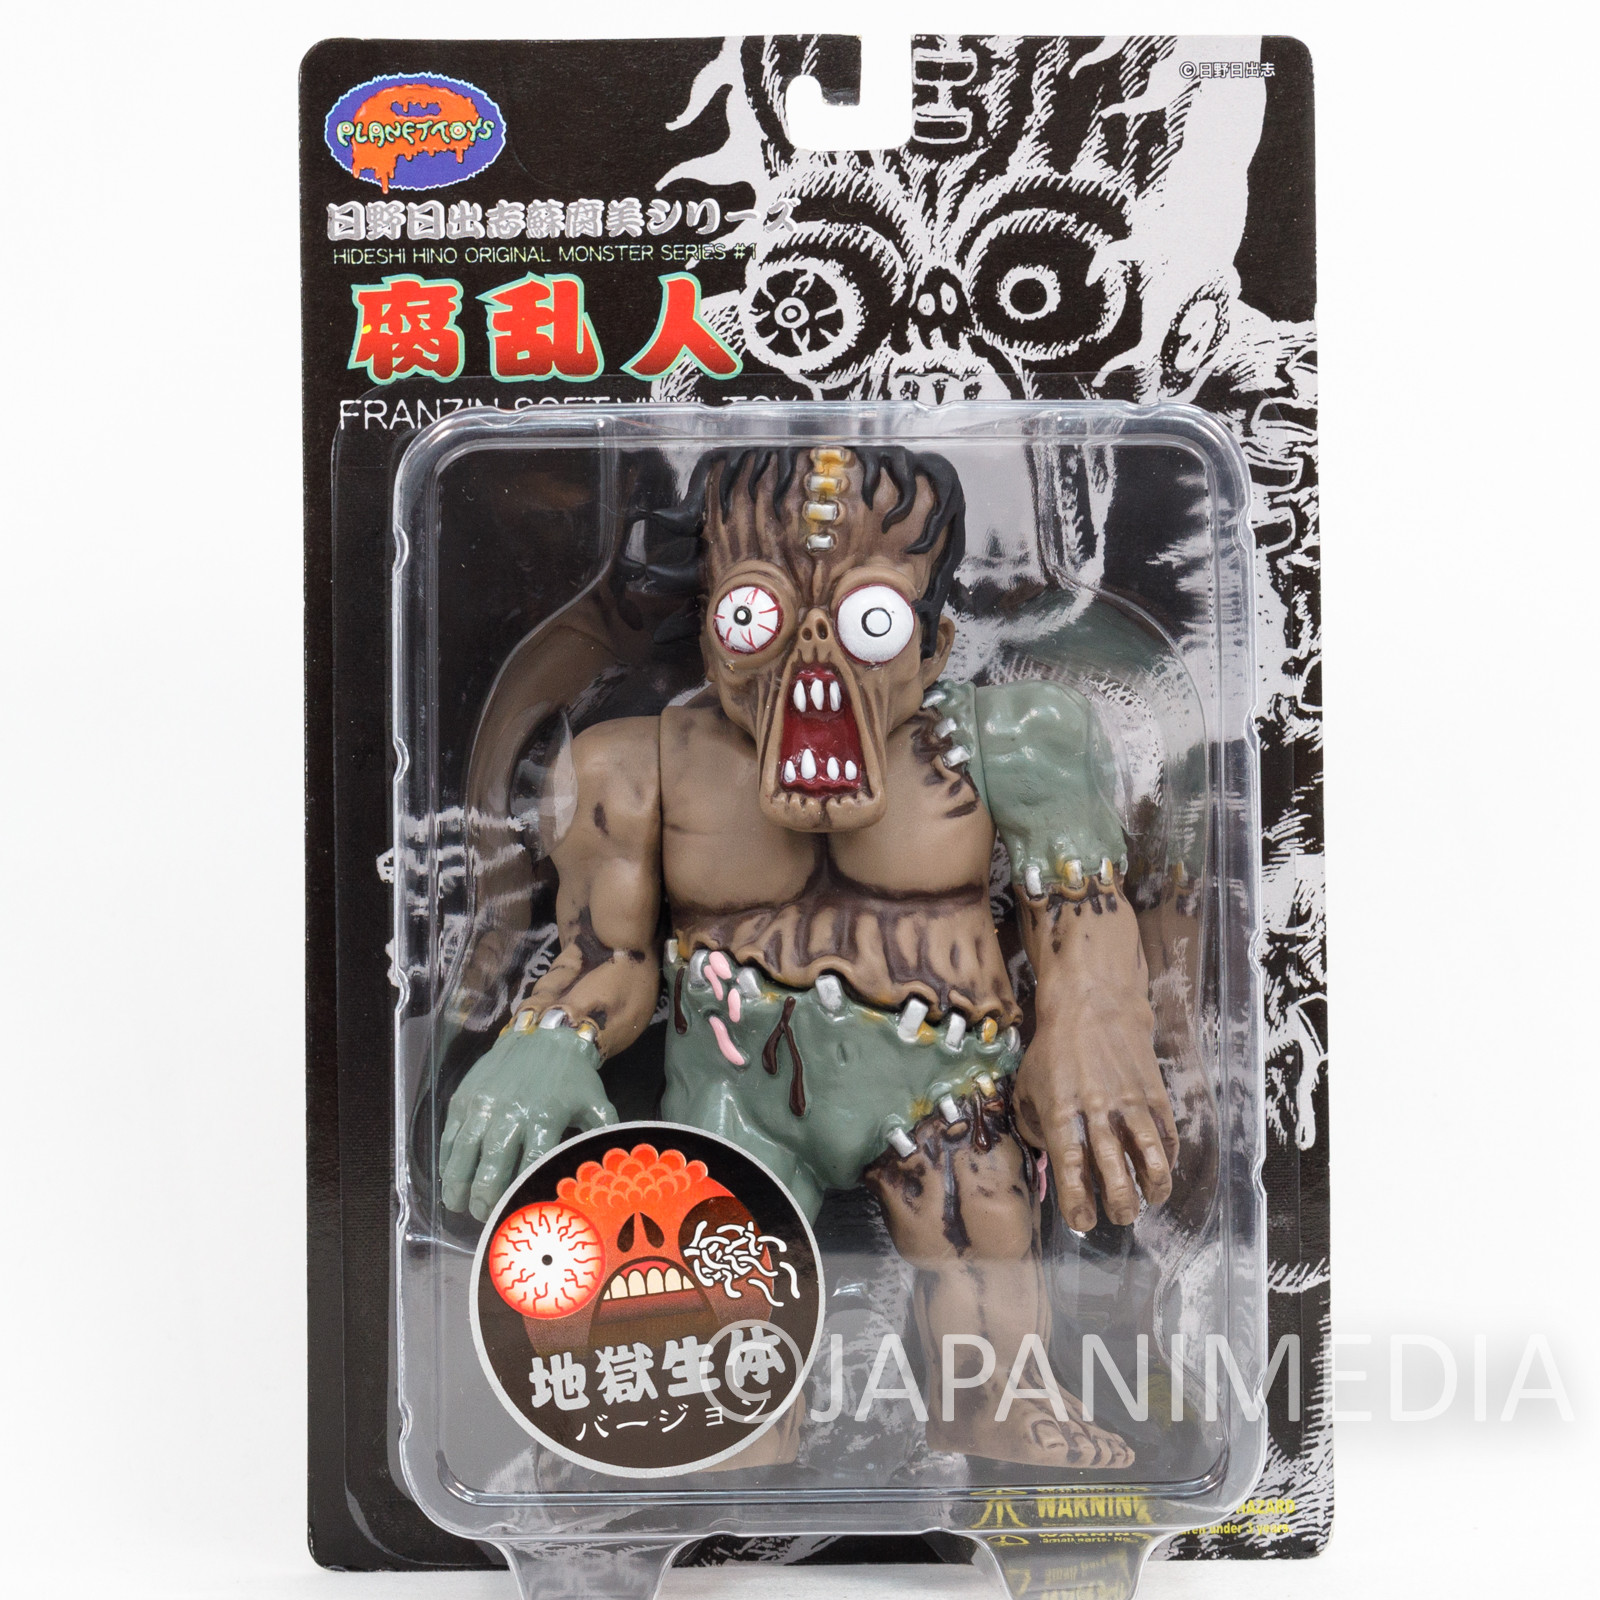 RARE! Franzin Soft Vinyl Figure Hideshi Hino Planet Toys JAPAN MANGA HORROR 2